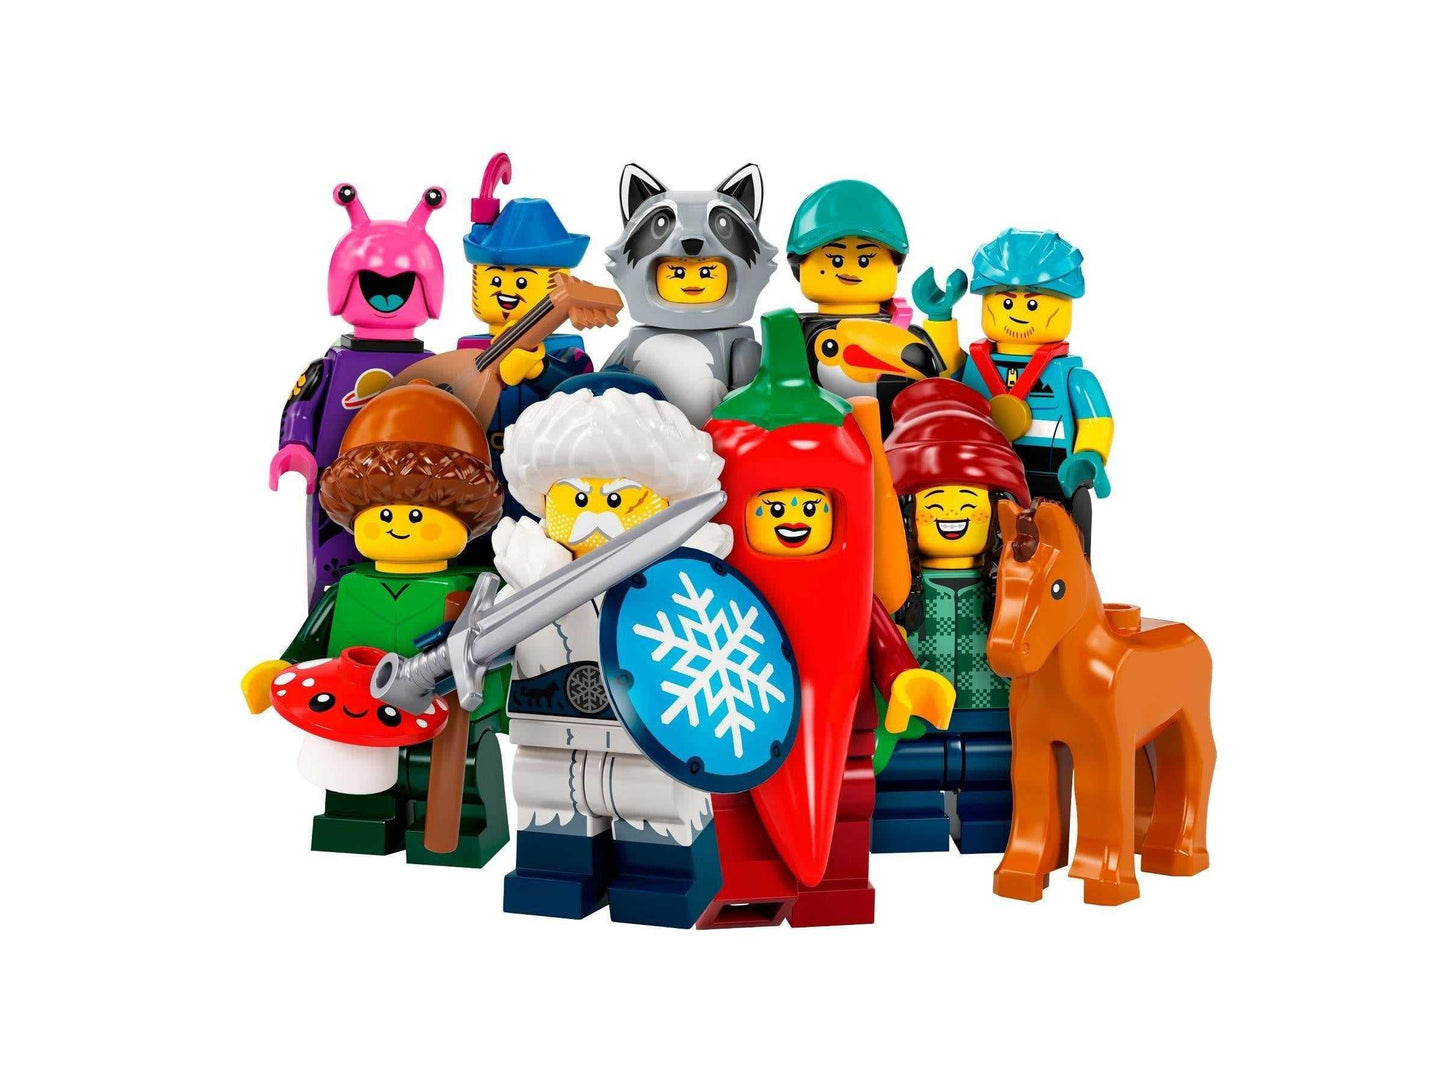 LEGO® Collectable Minifigures 71032 LEGO® Minifiguren Serie 22 - Peer Online Shop